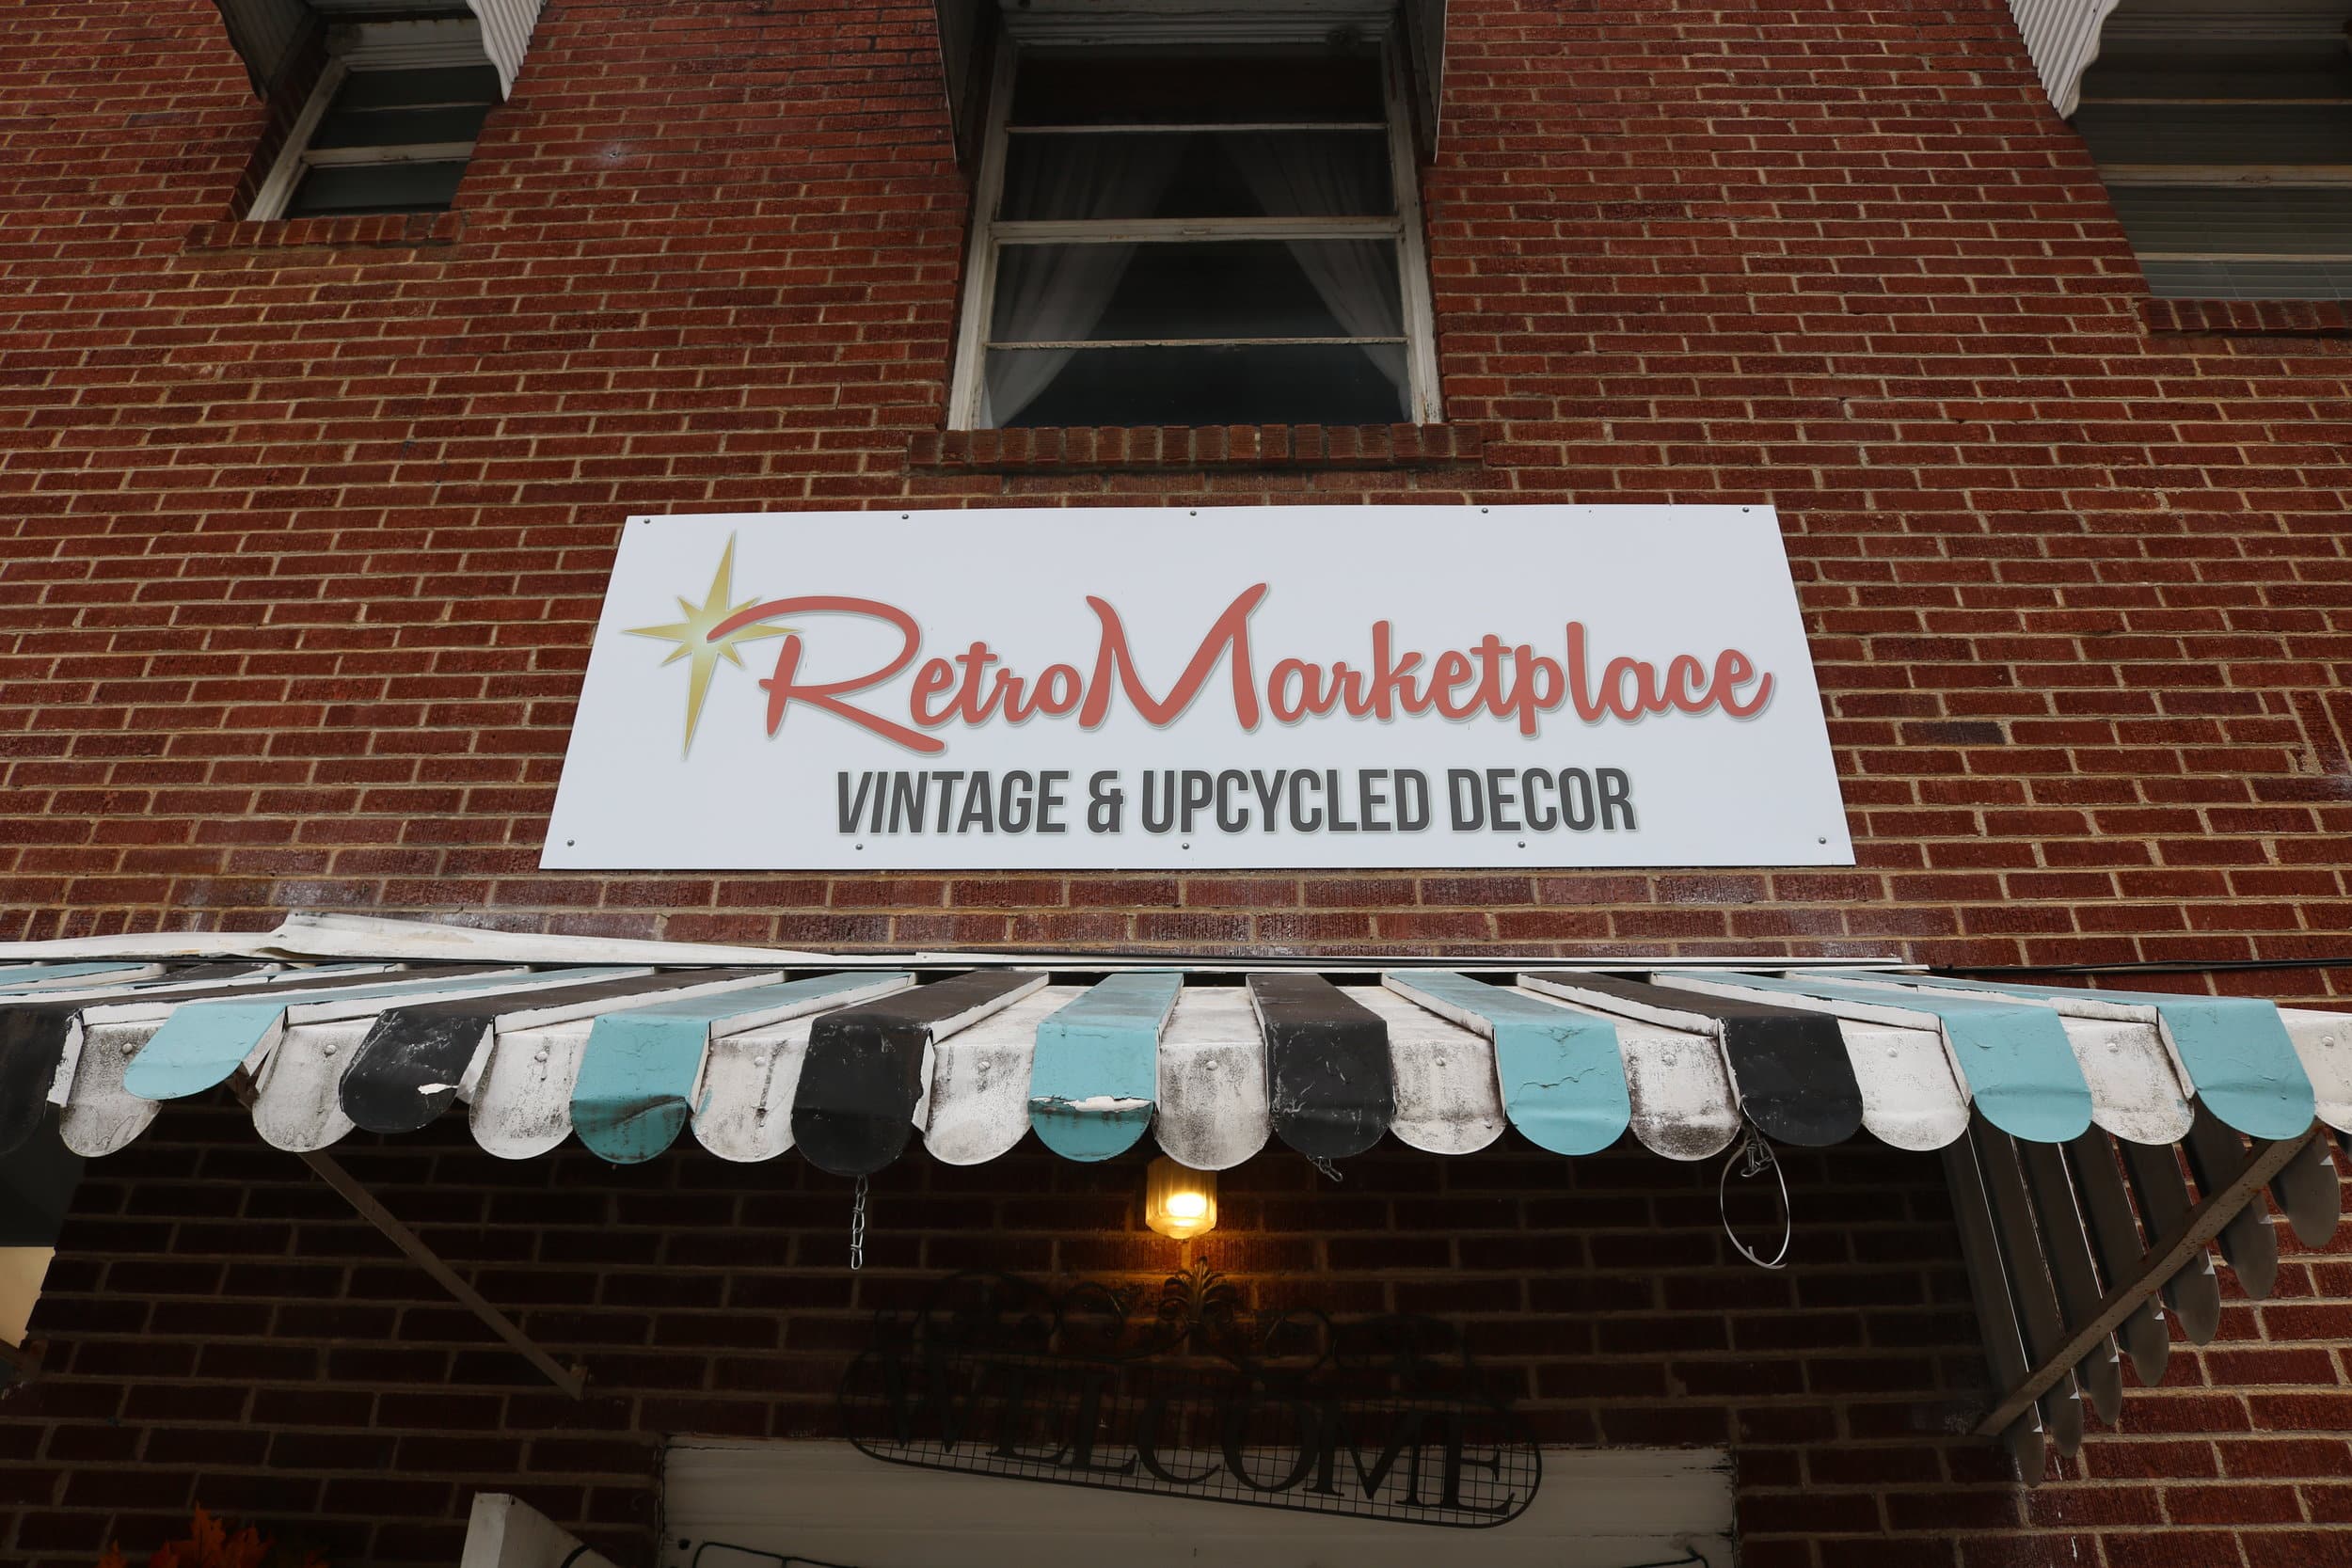 RetroMarketplace Vintage &amp; Upcycled Decor at 128 S. Main St., Travelers Rest, SC.